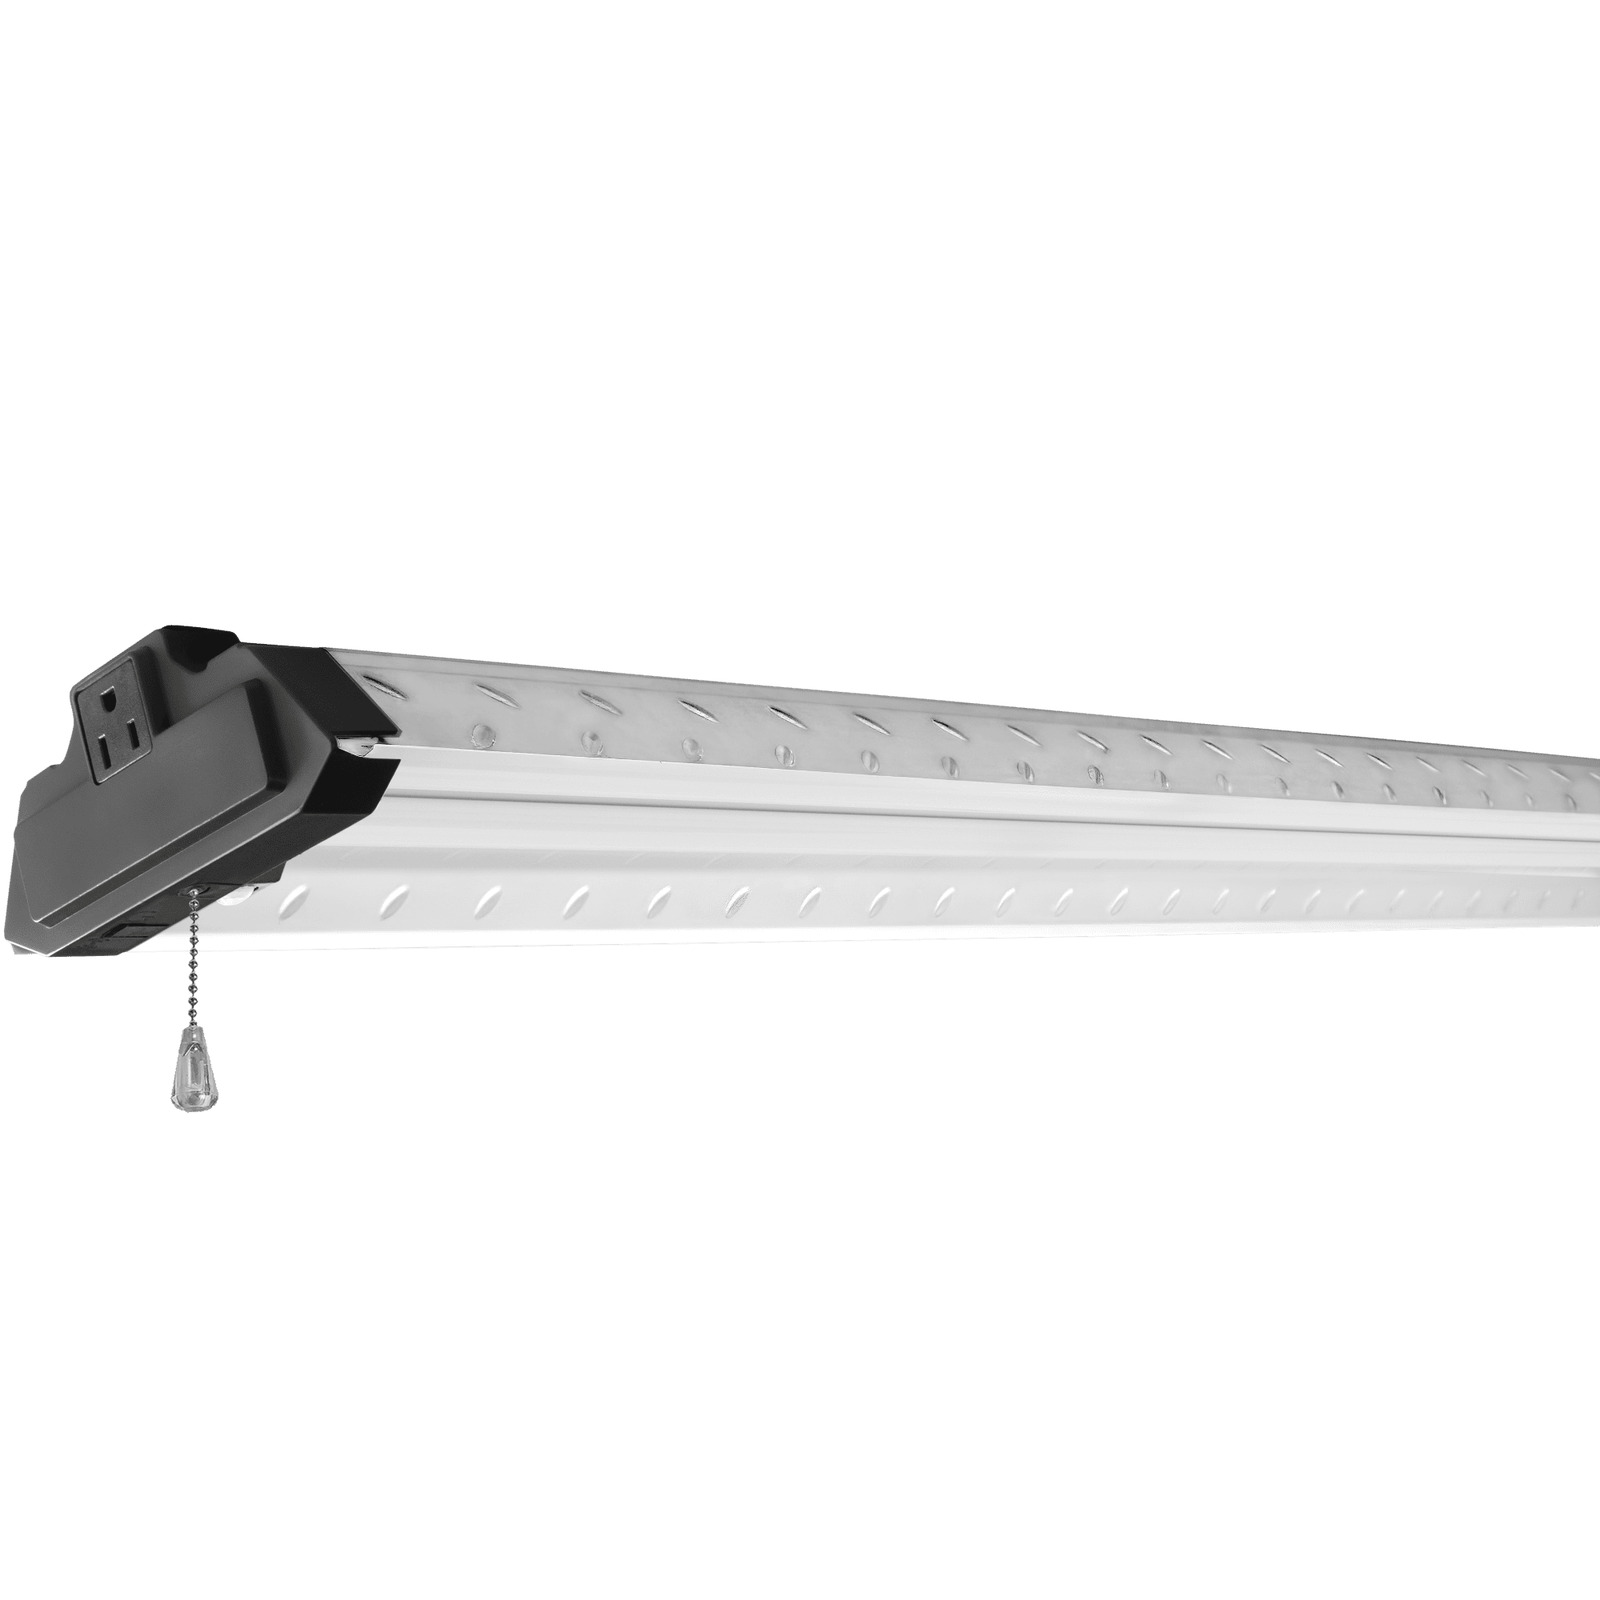 Electronic 4ft LED Shop Light 10,000 Lumen with Motion Sensor, Steel Tread Plate